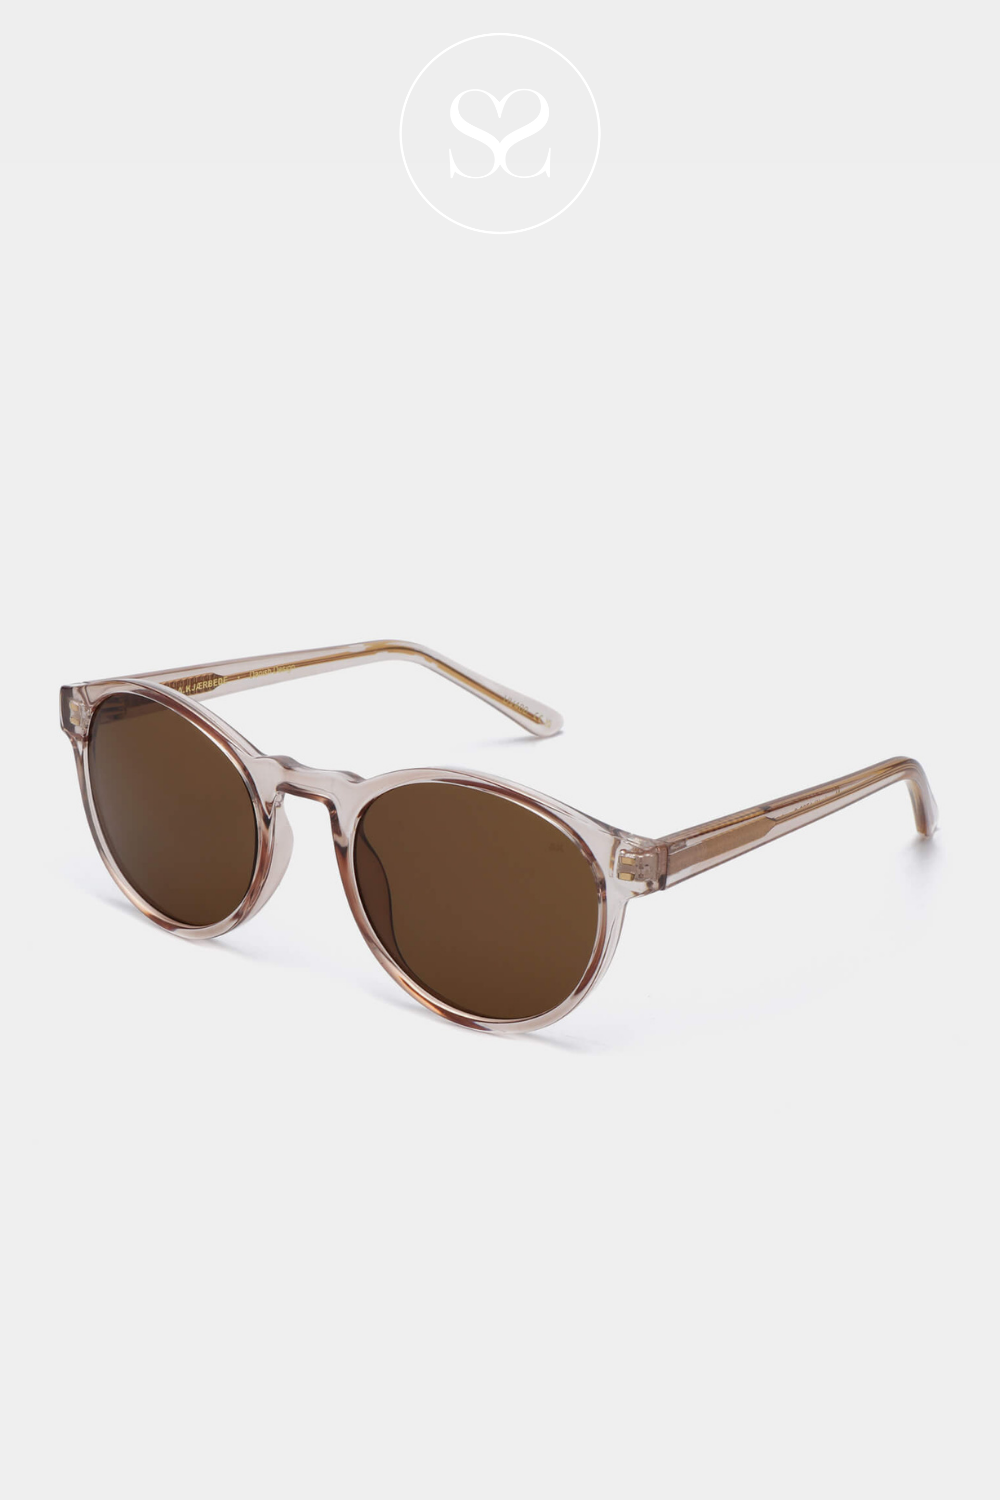 Marvin Champagne sunglasses accessories